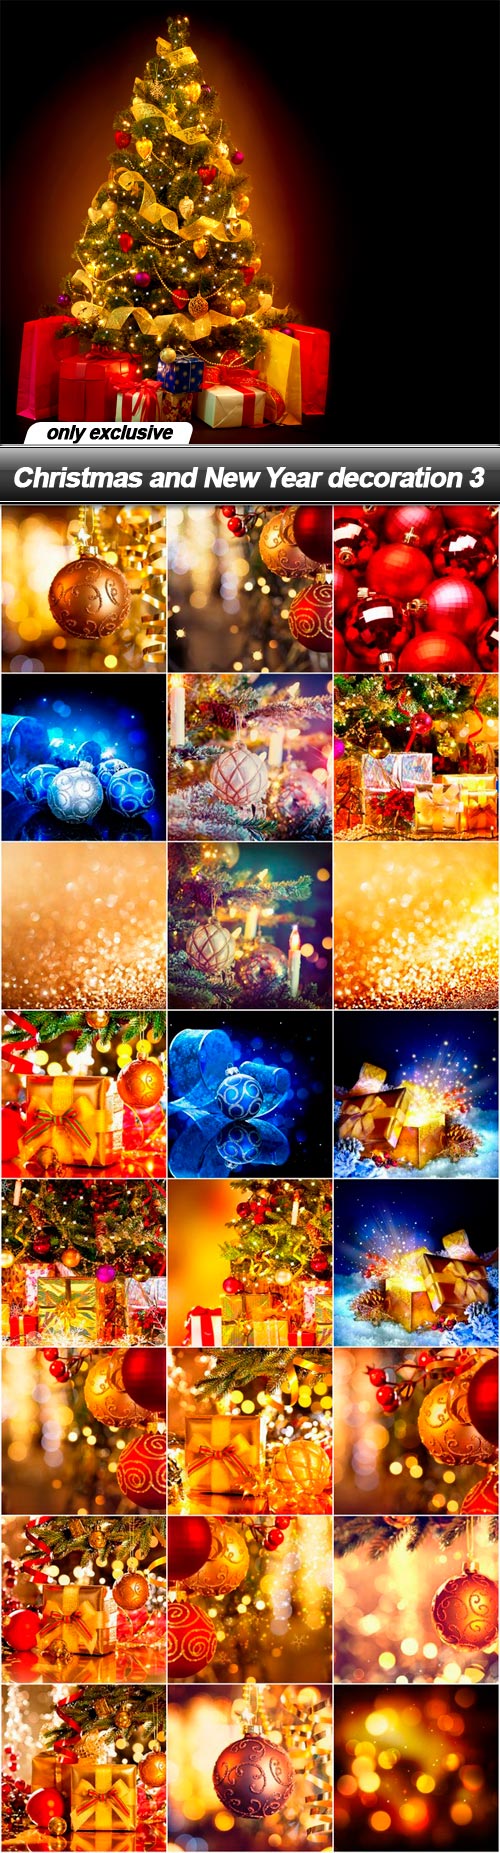 Christmas and New Year decoration 3 - 25 UHQ JPEG